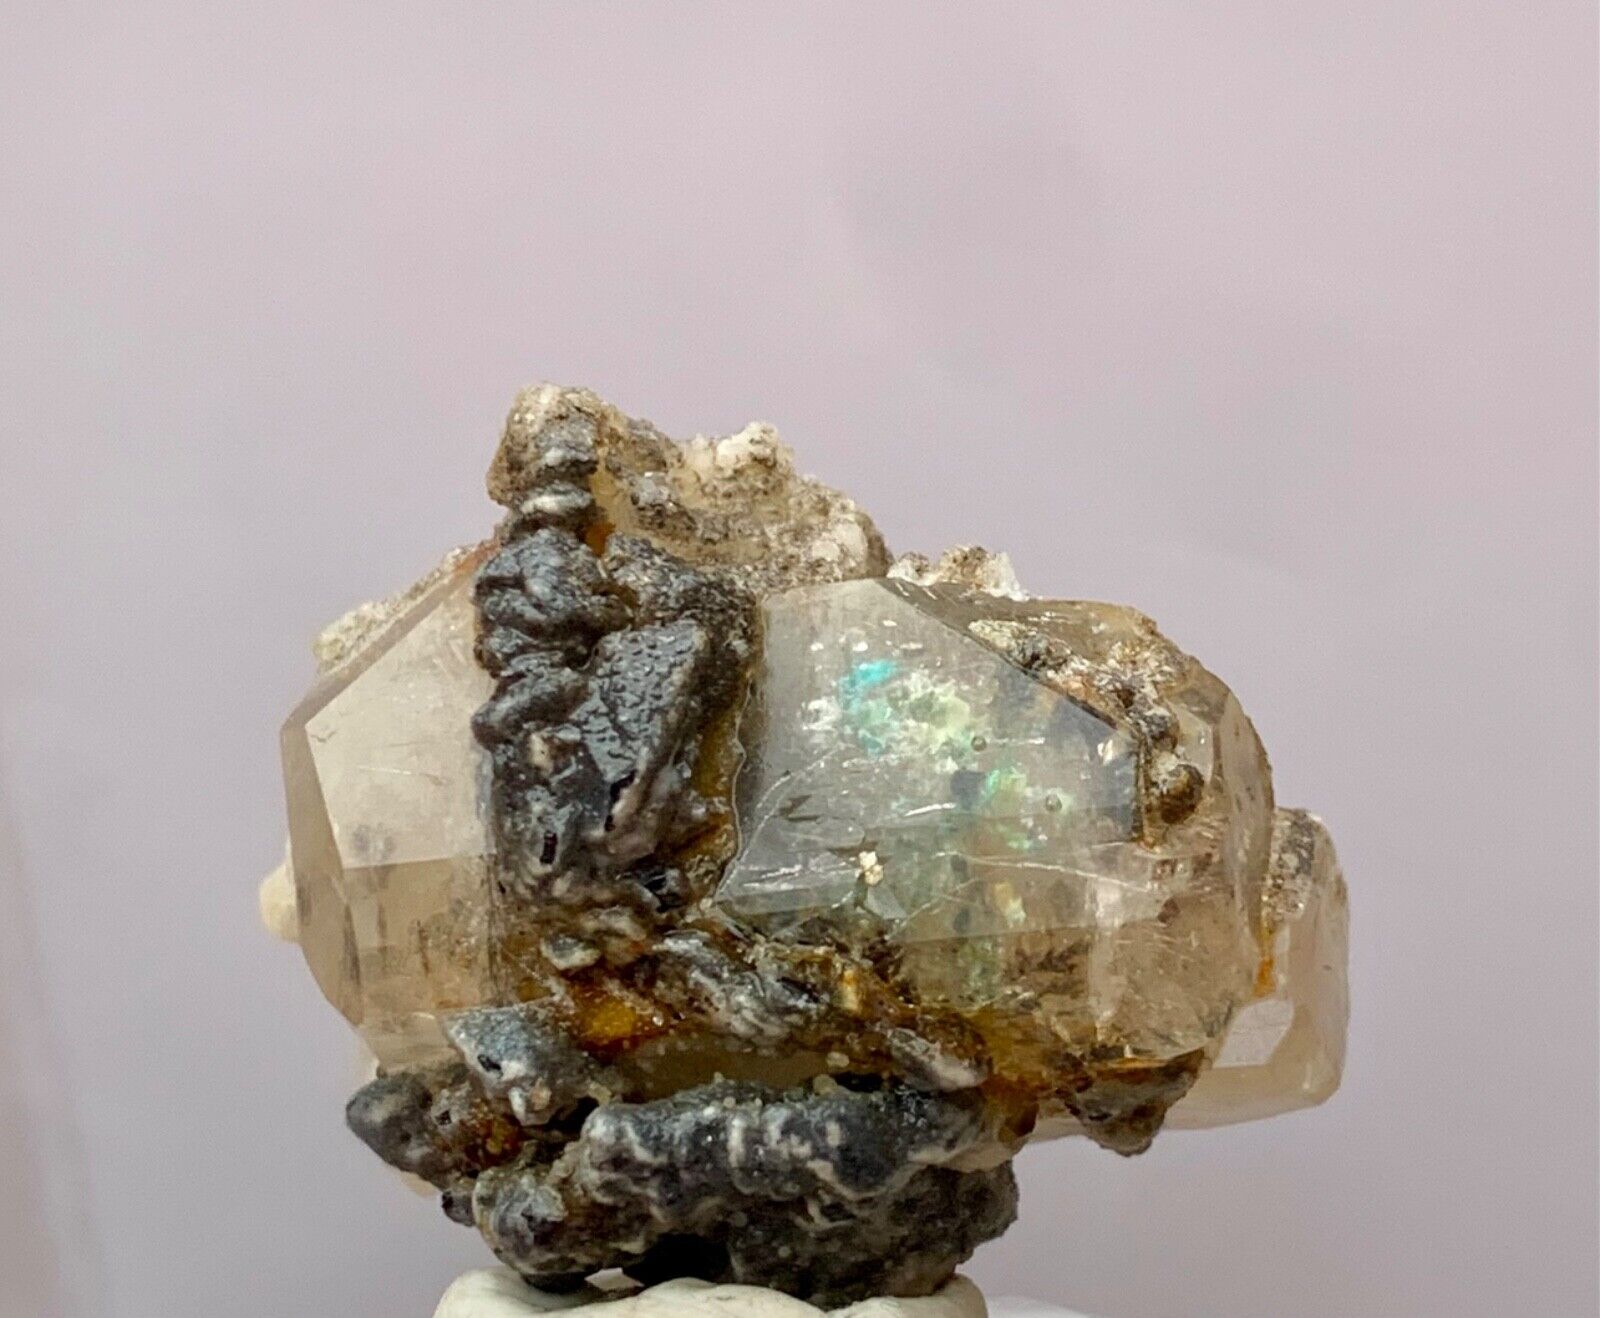 139 Carat Topaz Crystal Combine With Matrix & Rainbow inclusion Natural Specimen